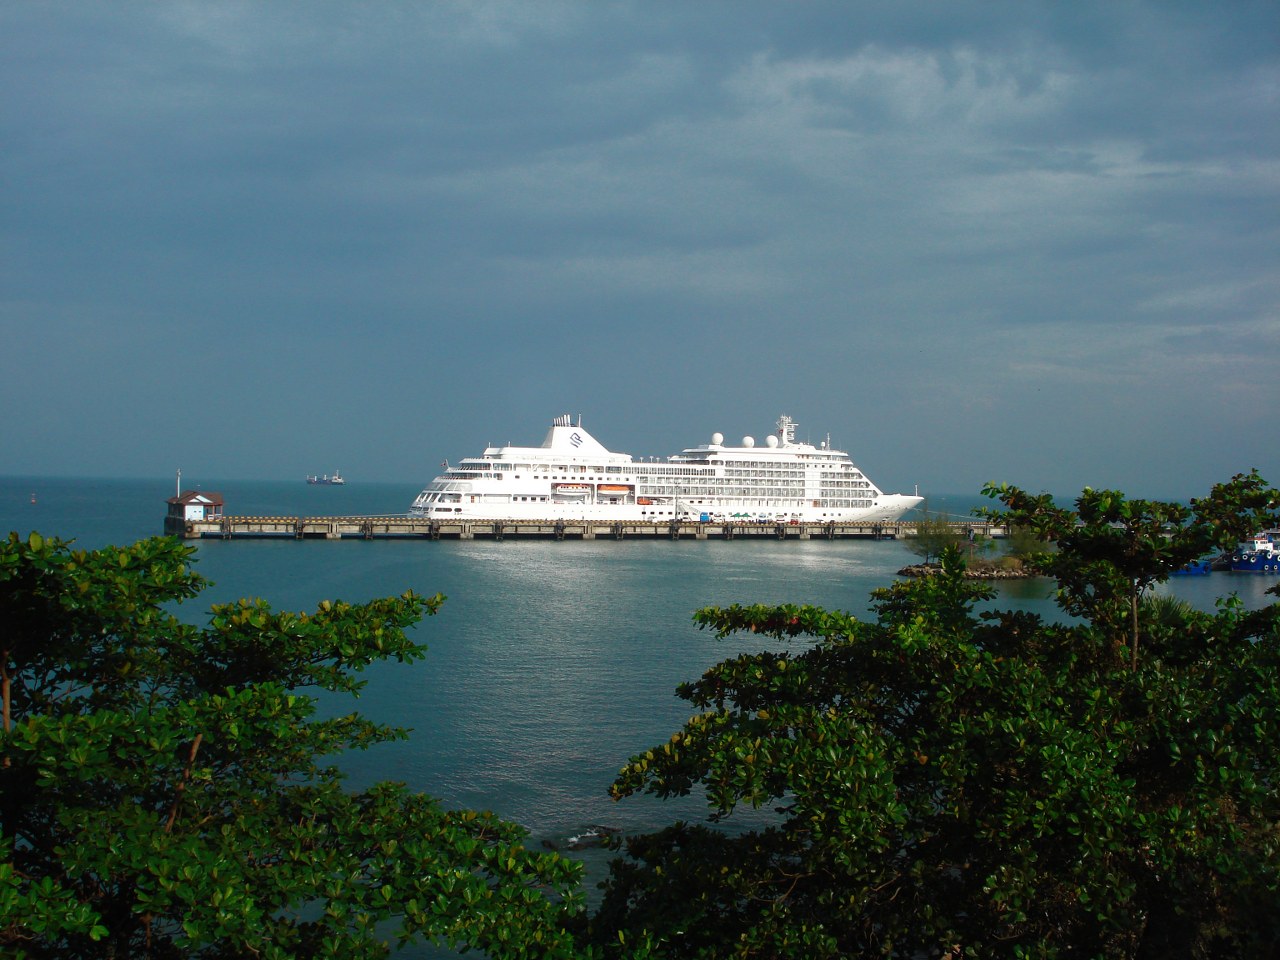 attraction-Sihanouk ville Economy Cruise Ship.jpg